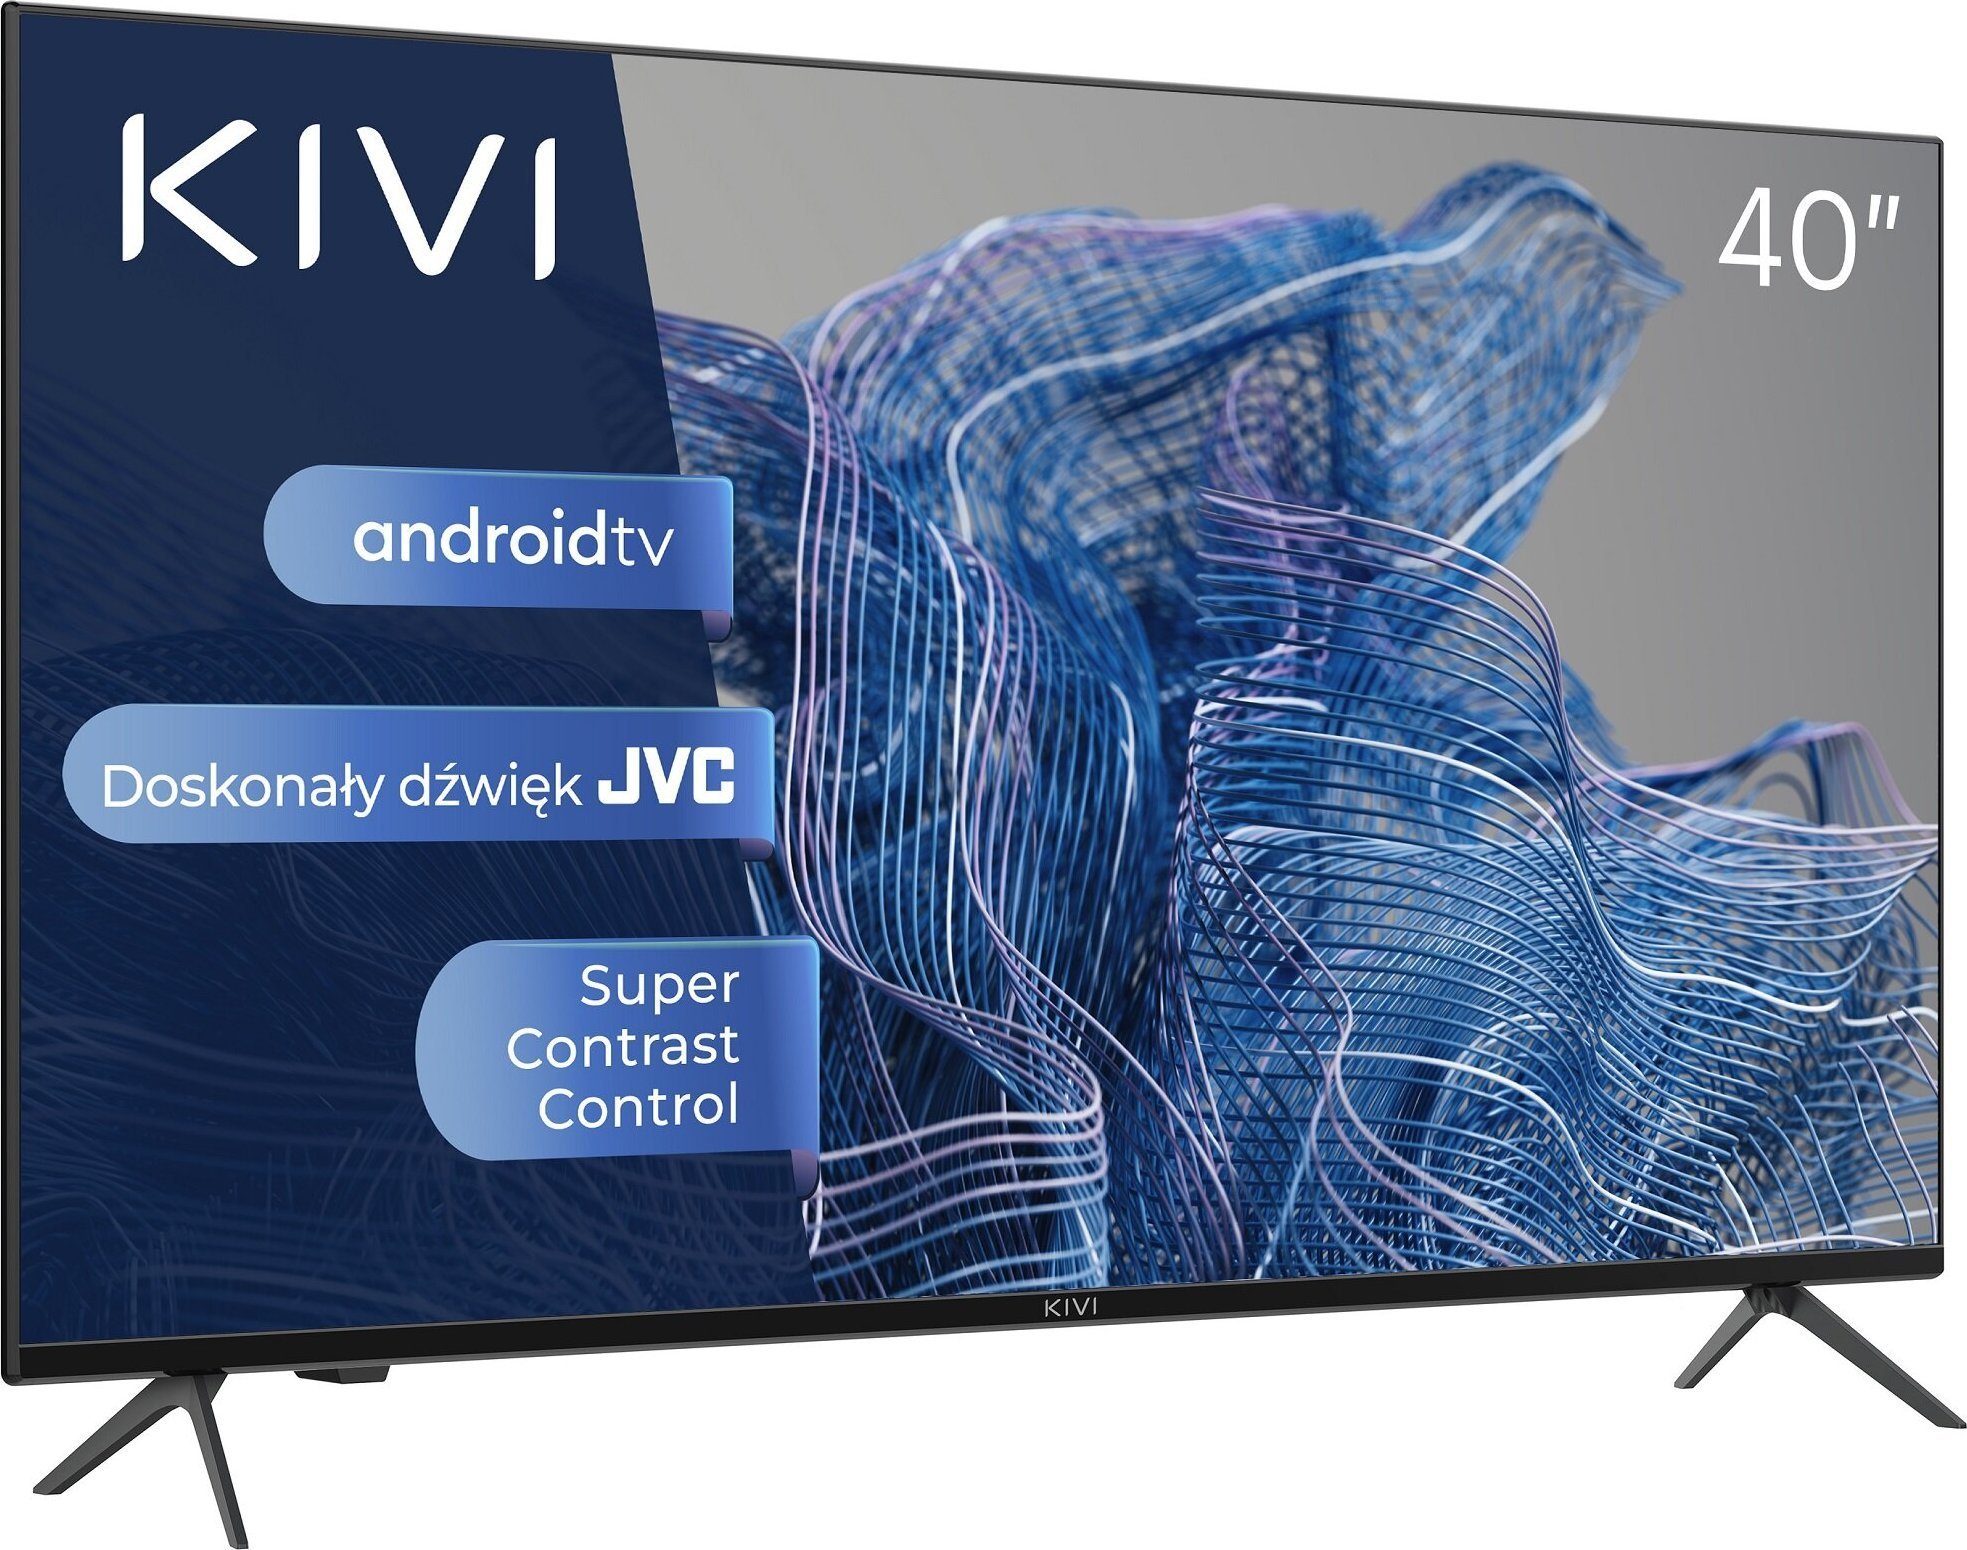 Telewizor Kivi 40', FHD, Google Android TV, Black, 1920x1080, 60 Hz, Sound by JVC, 2x8W, 41 kWh/1000h , BT5, HDMI ports 3, 24 months